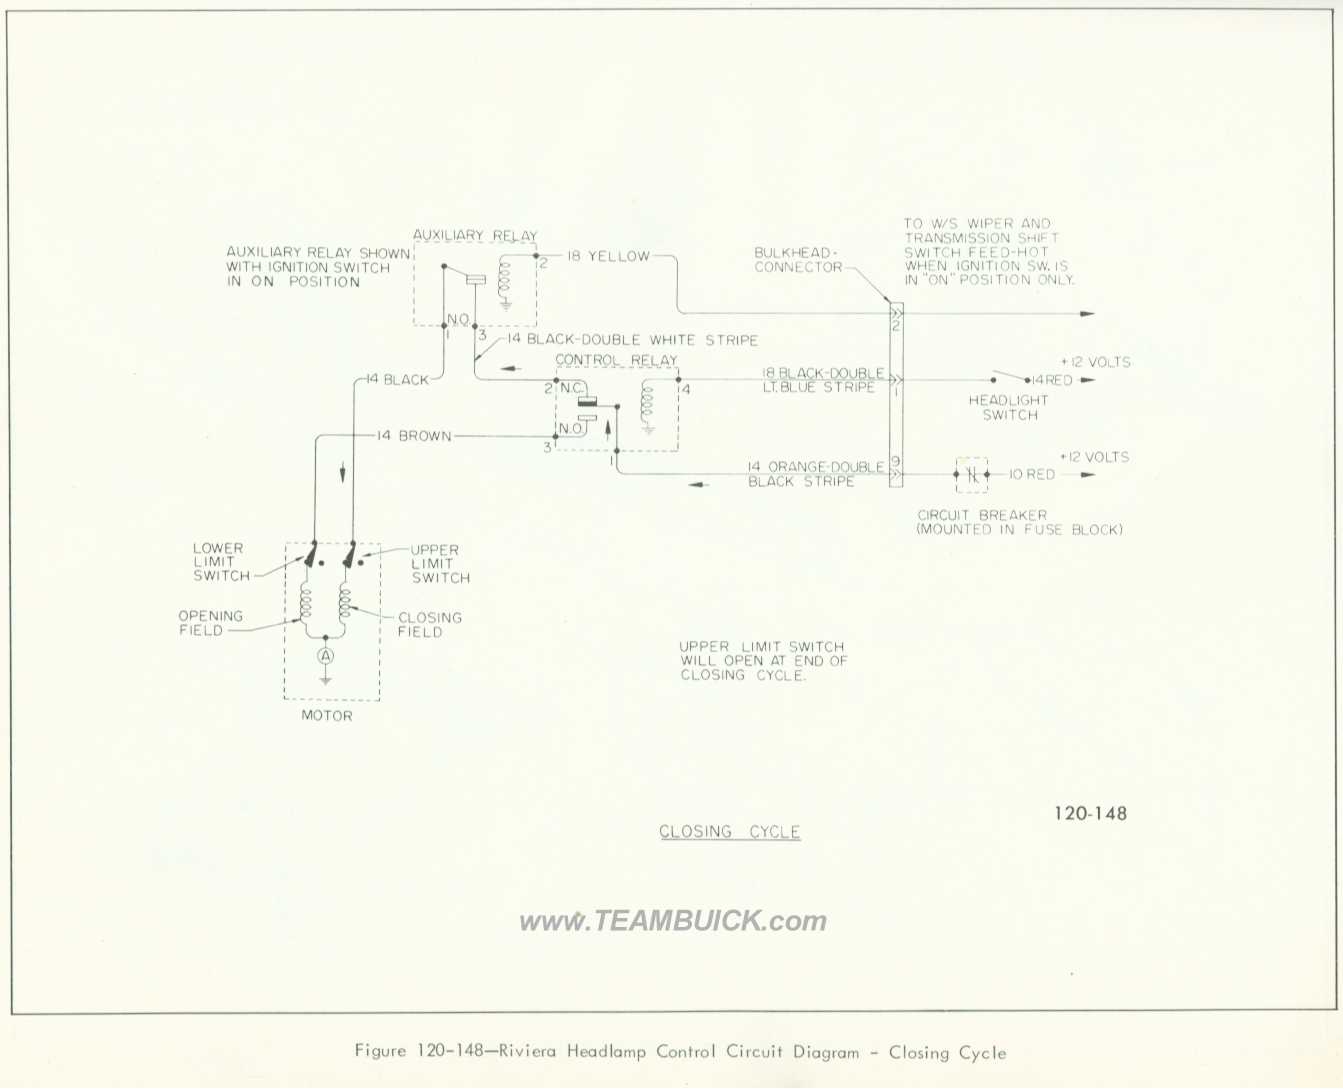 1966 Buick Riviera, Headlamp Control Circuit Diagram - Closing Cycle